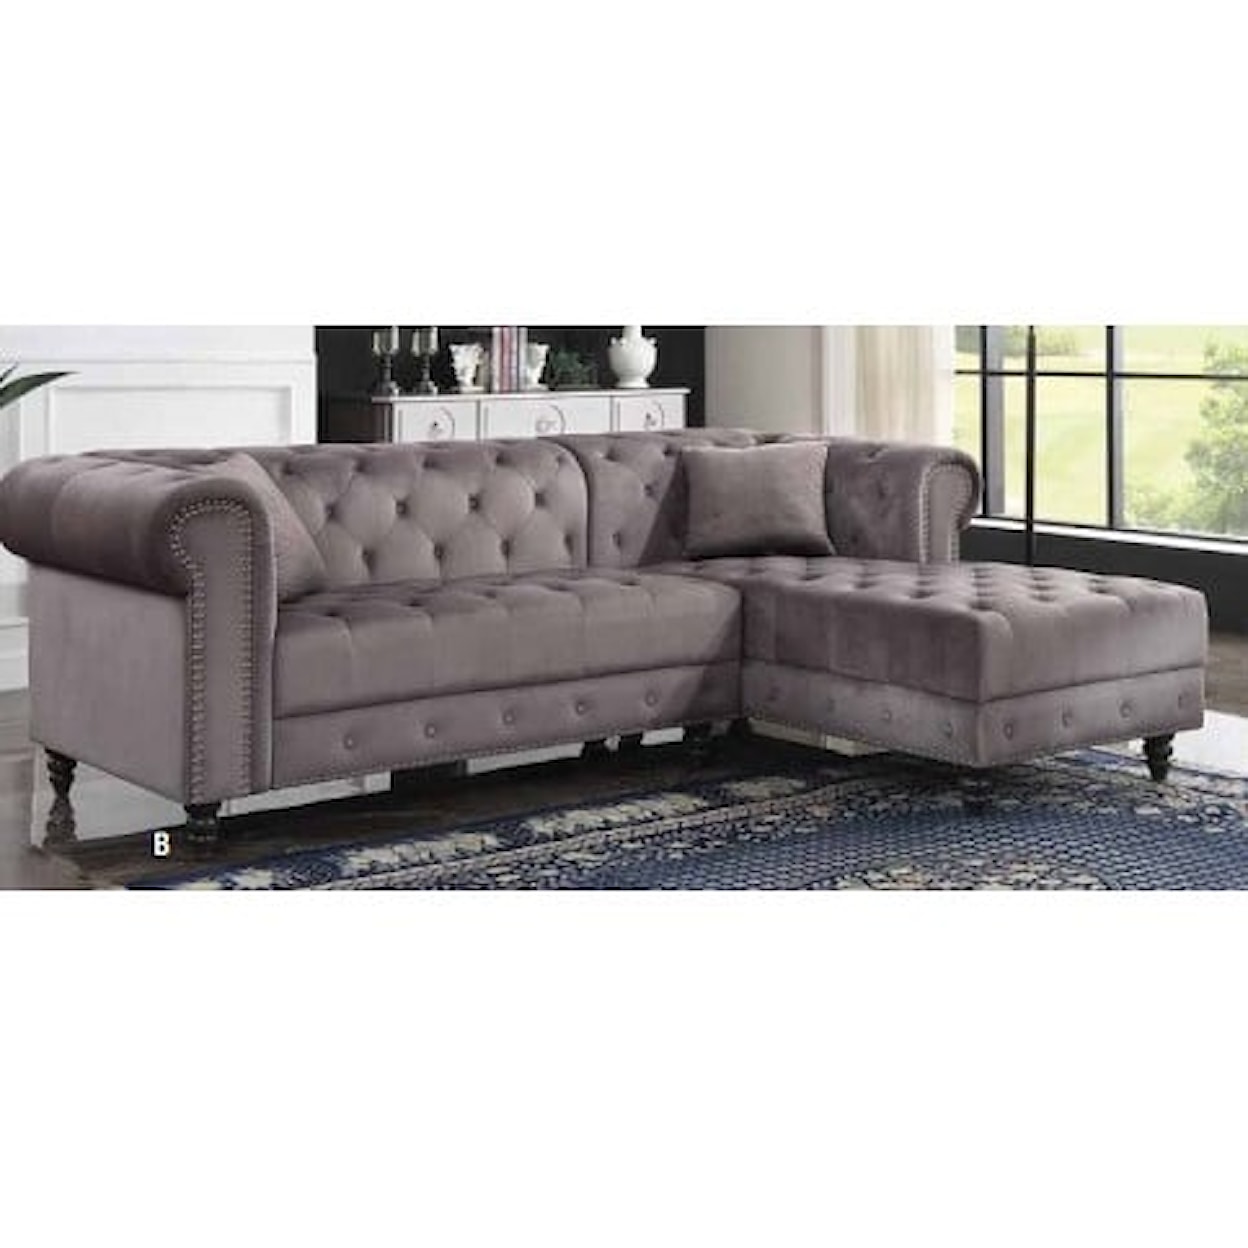 Acme Furniture Adnelis Sectional Sofa W/2 Pillows